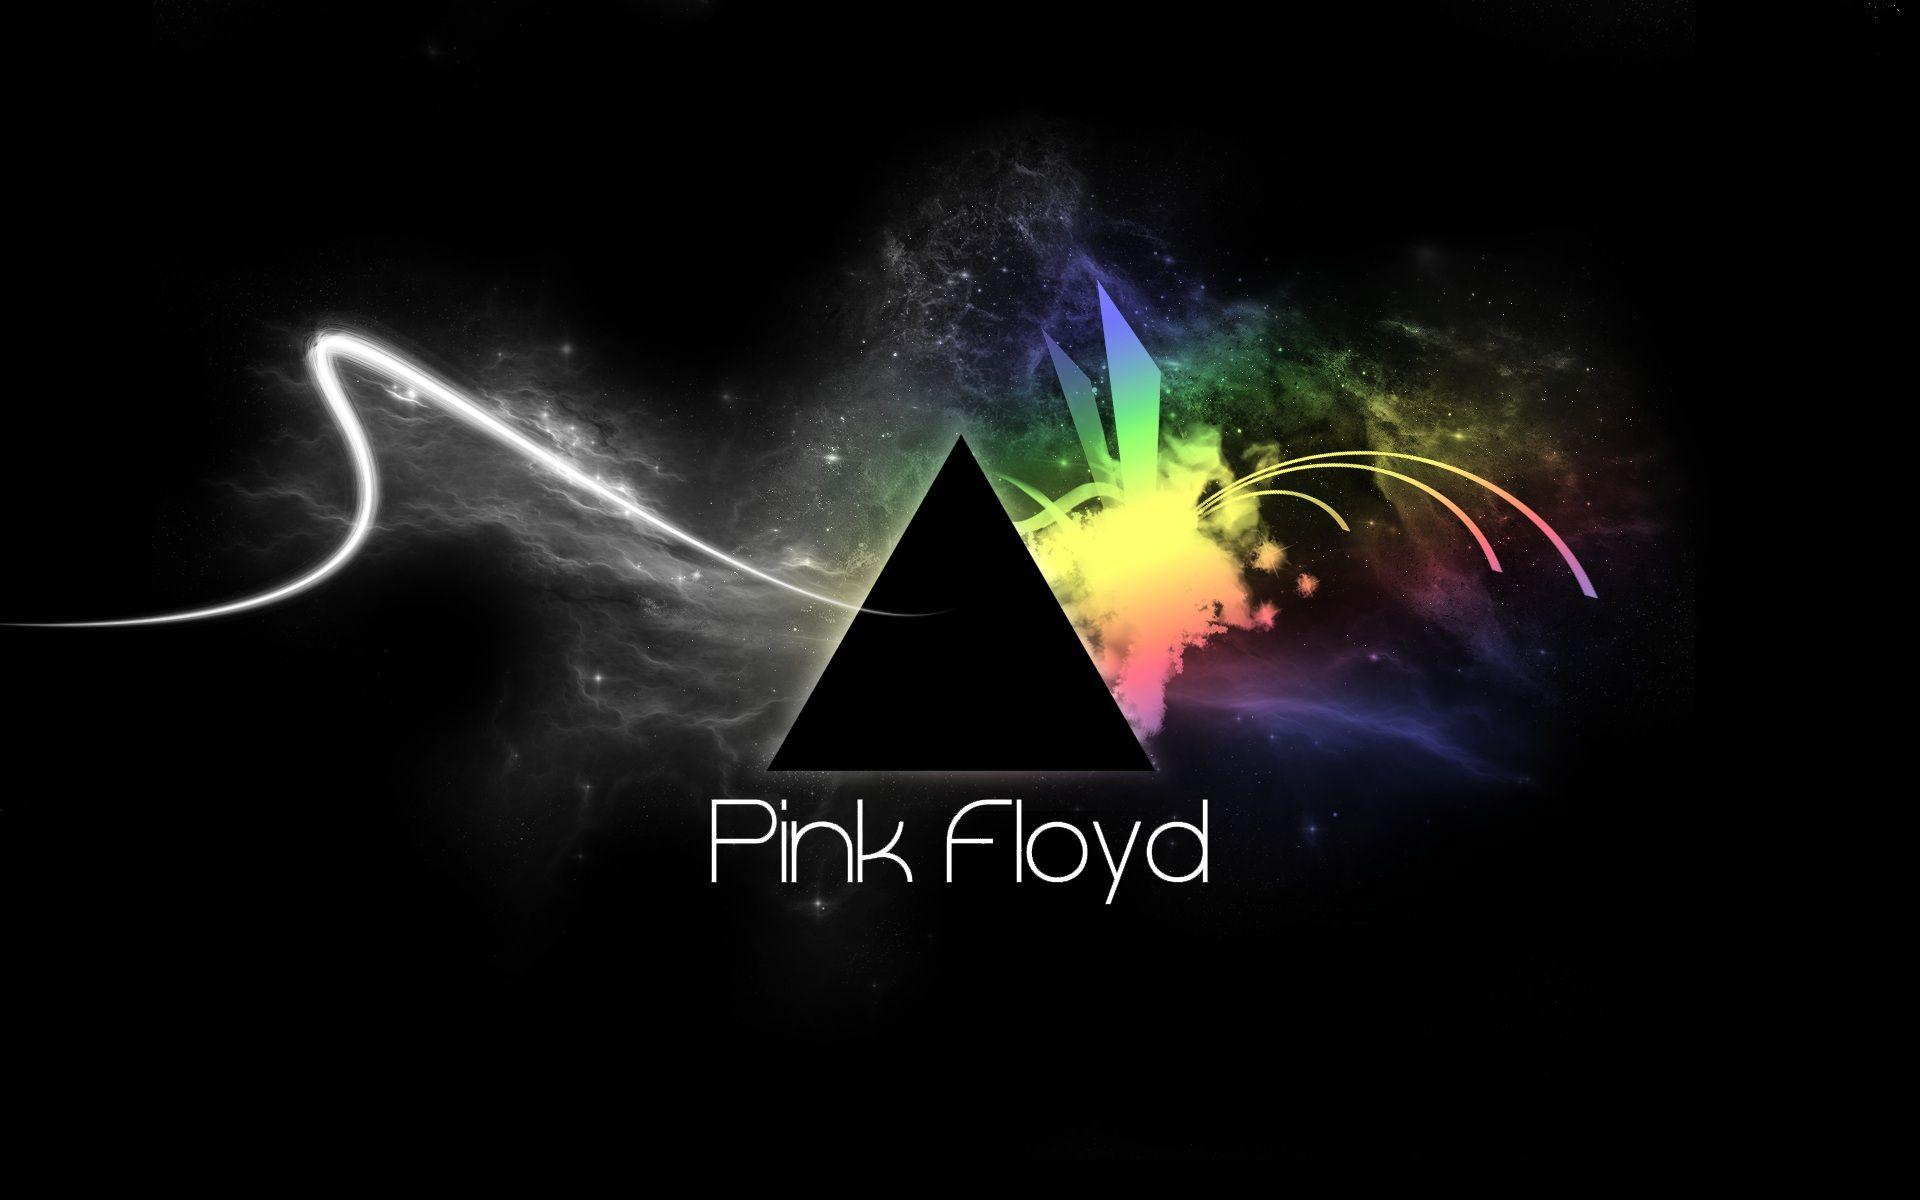 Pink Floyd Wallpaper 23798 1920x1200 px